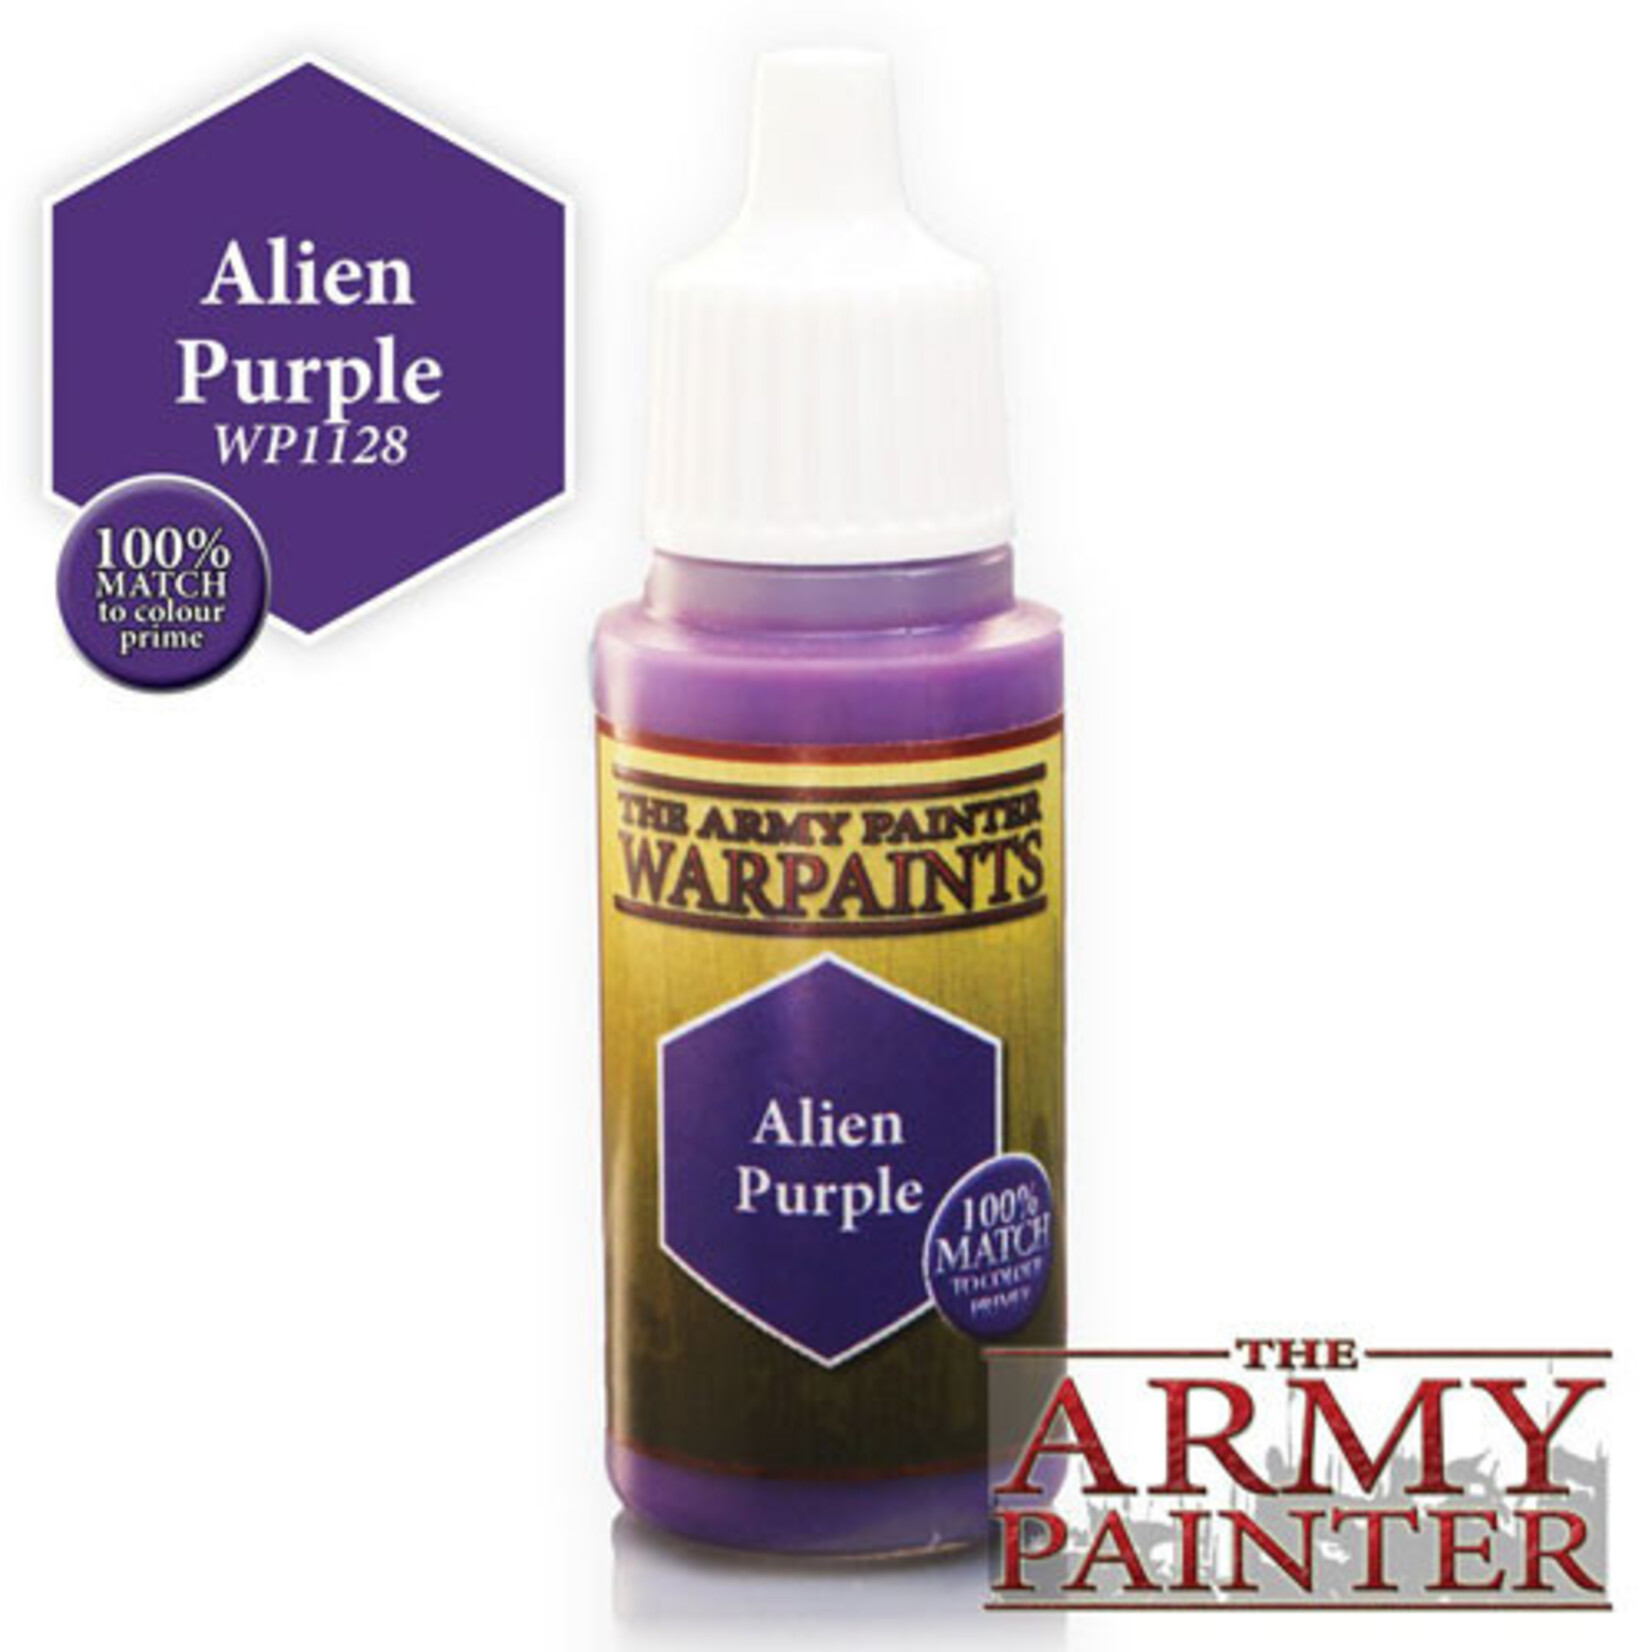 The Army Painter Warpaints: Alien Purple 18ml